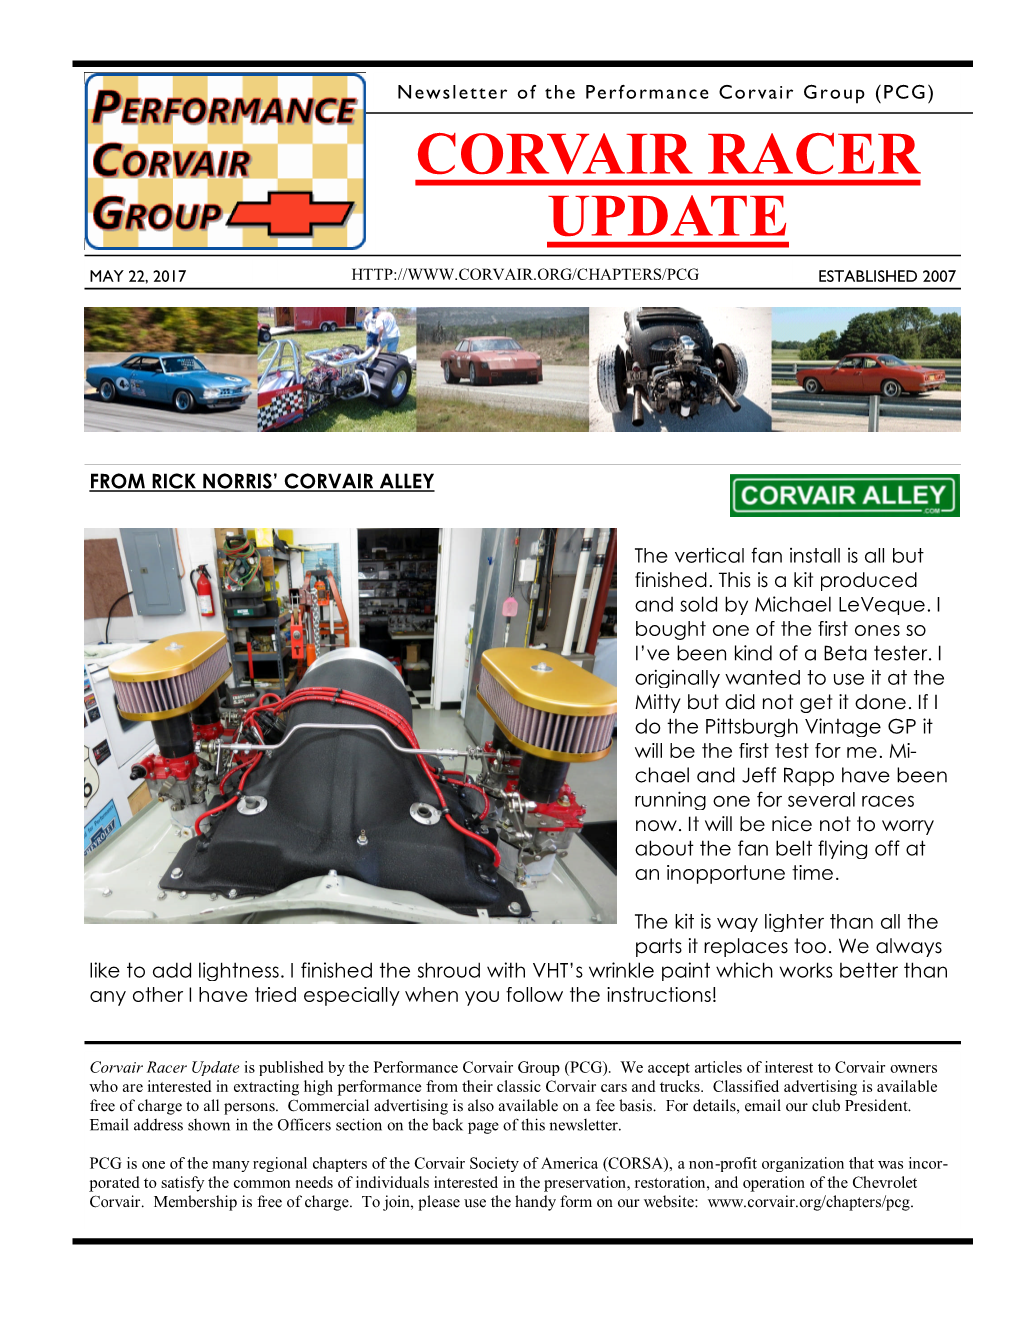 Corvair Racer Update